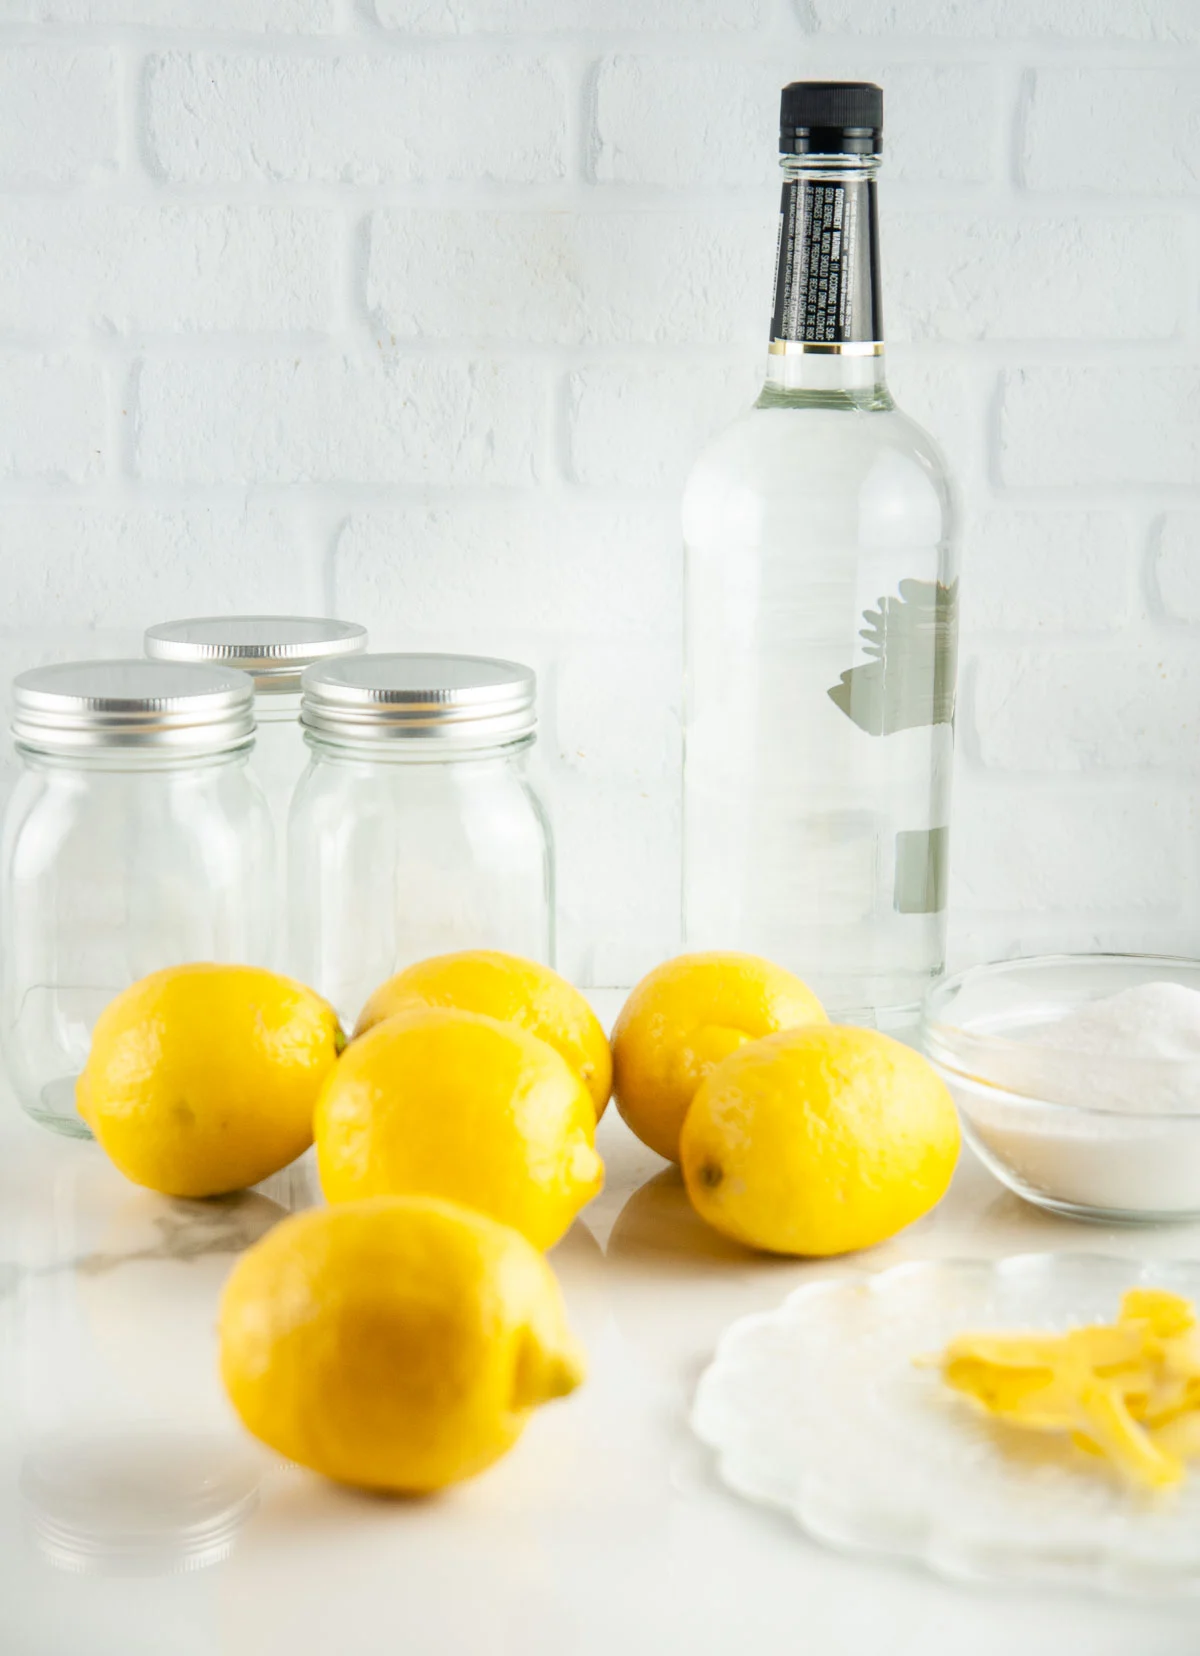 Ingredients for Homemade Limoncello Recipe: Vodka, Lemons, Sugar, Water